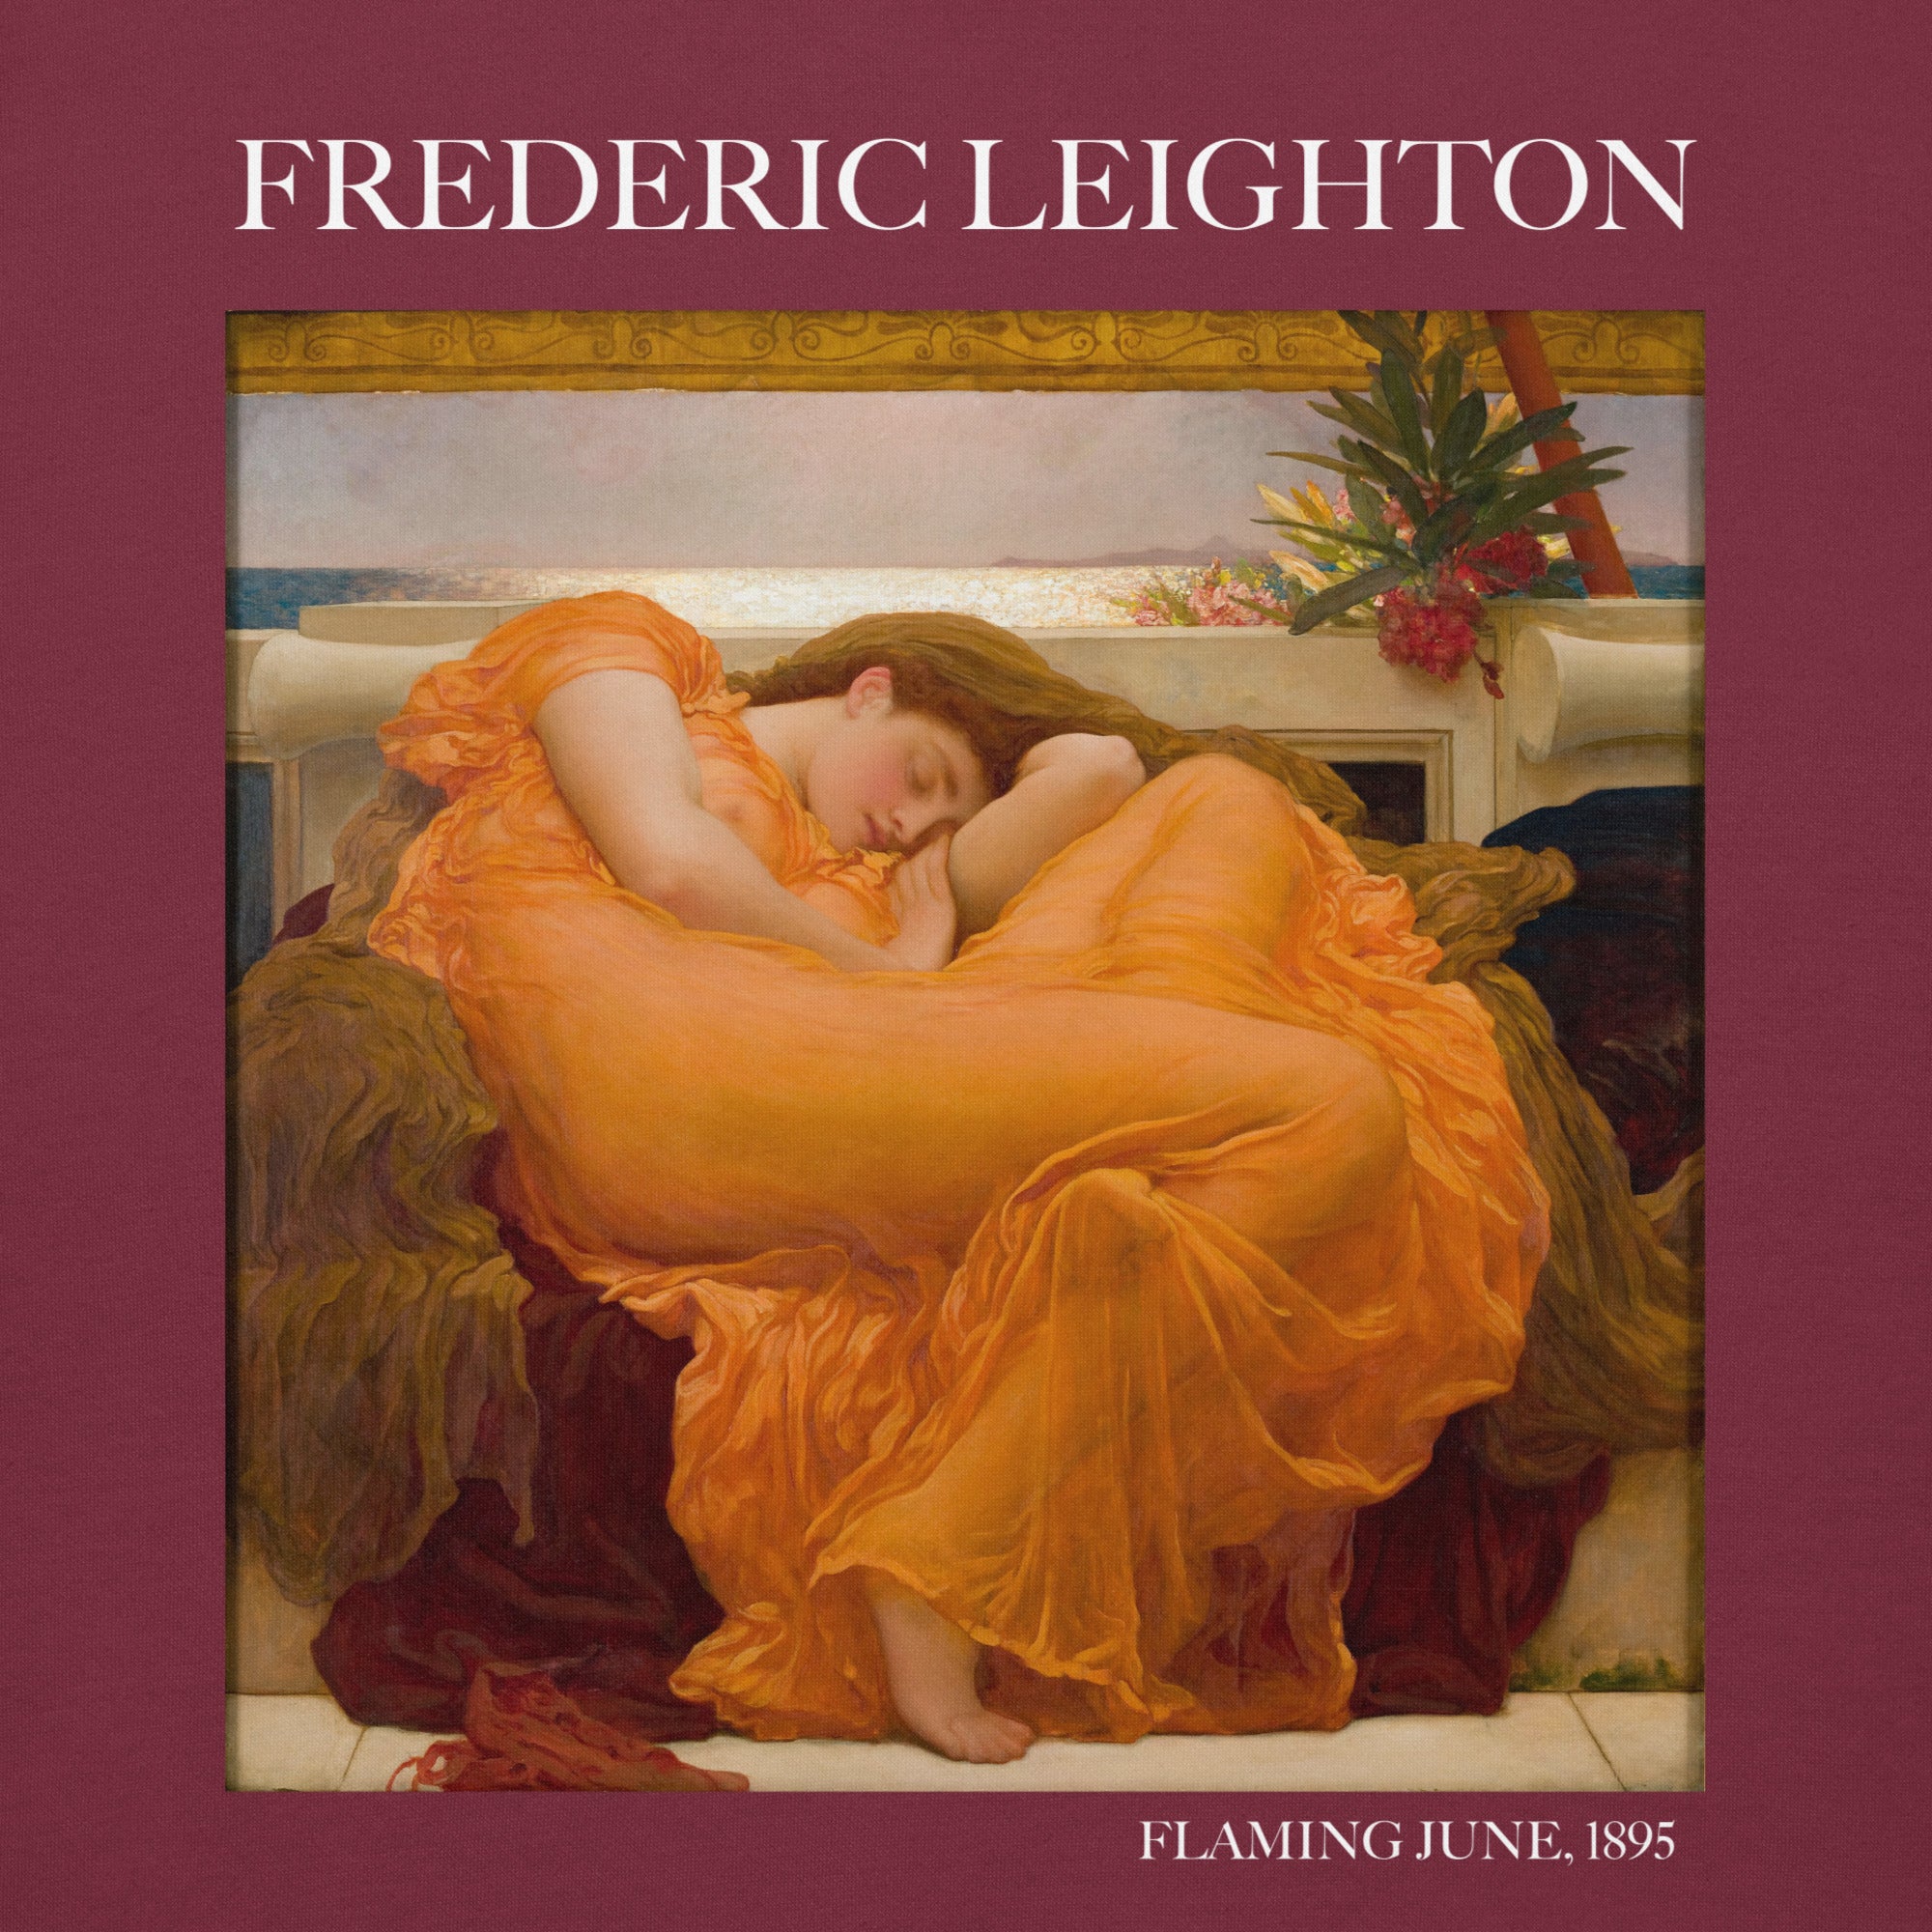 Frederic Leighton 'Flaming June' Famous Painting Hoodie | Unisex Premium Art Hoodie